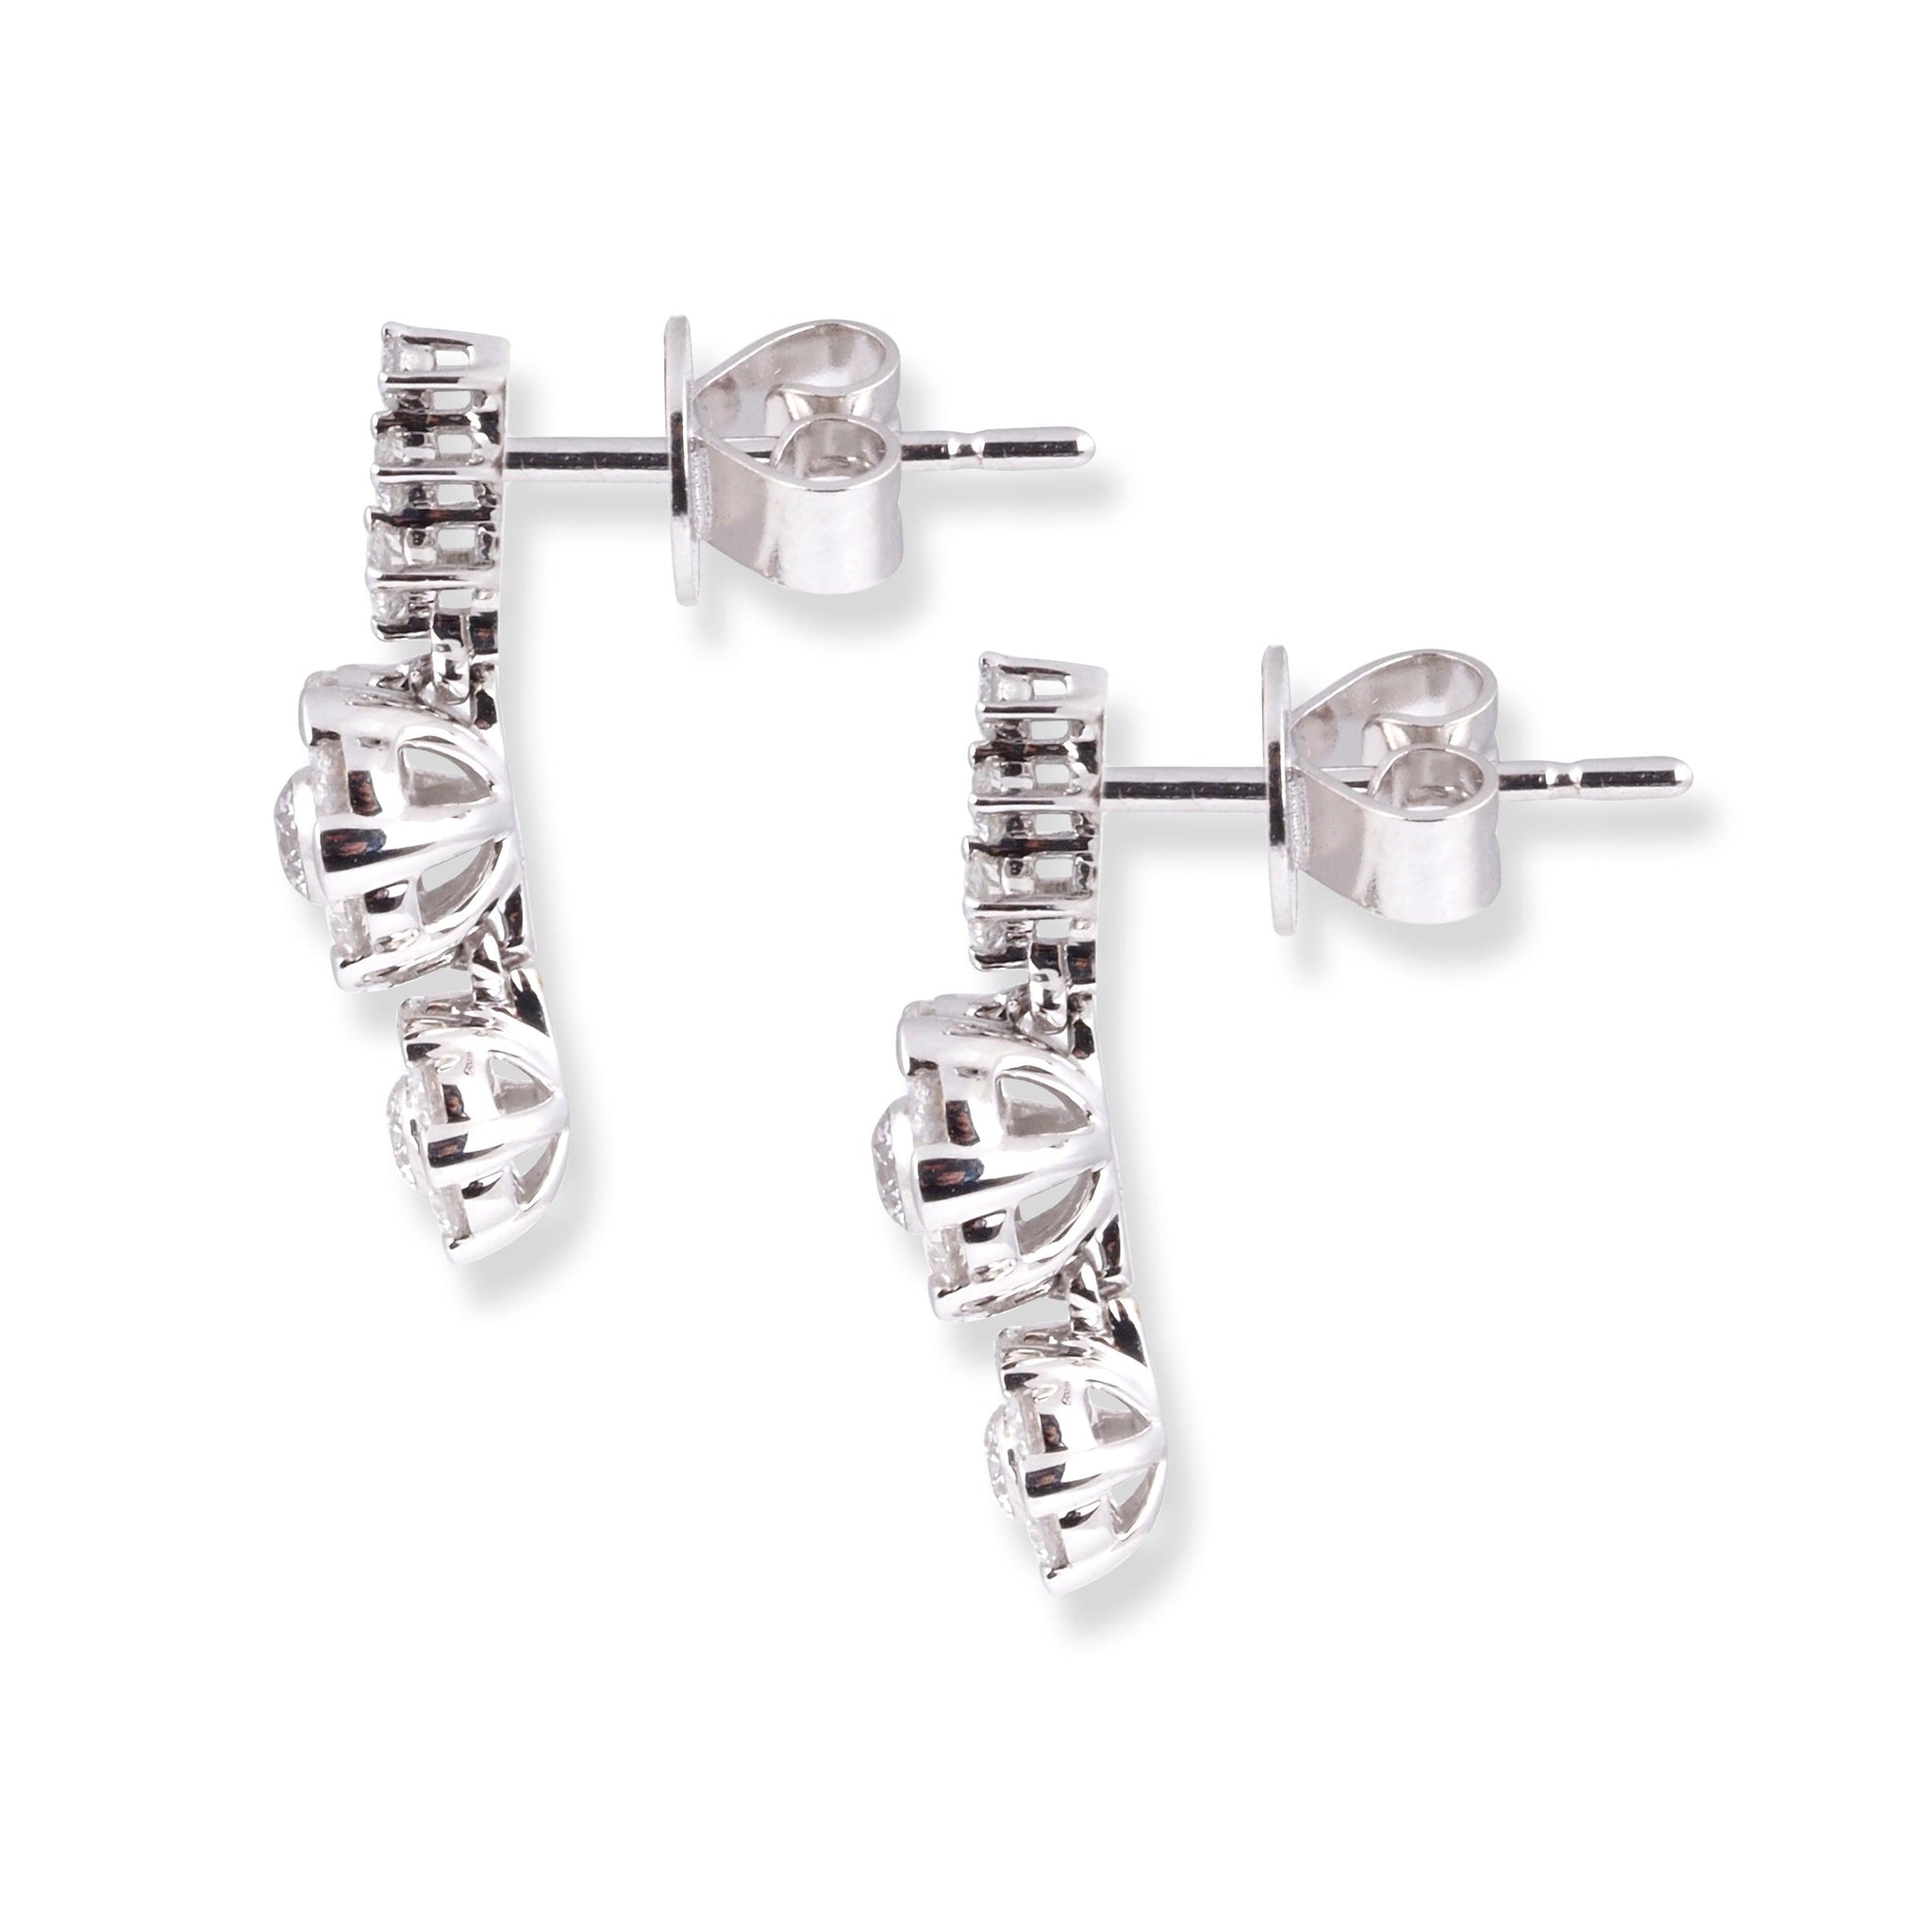 18ct White Gold Diamond Drop Earrings E33063-20